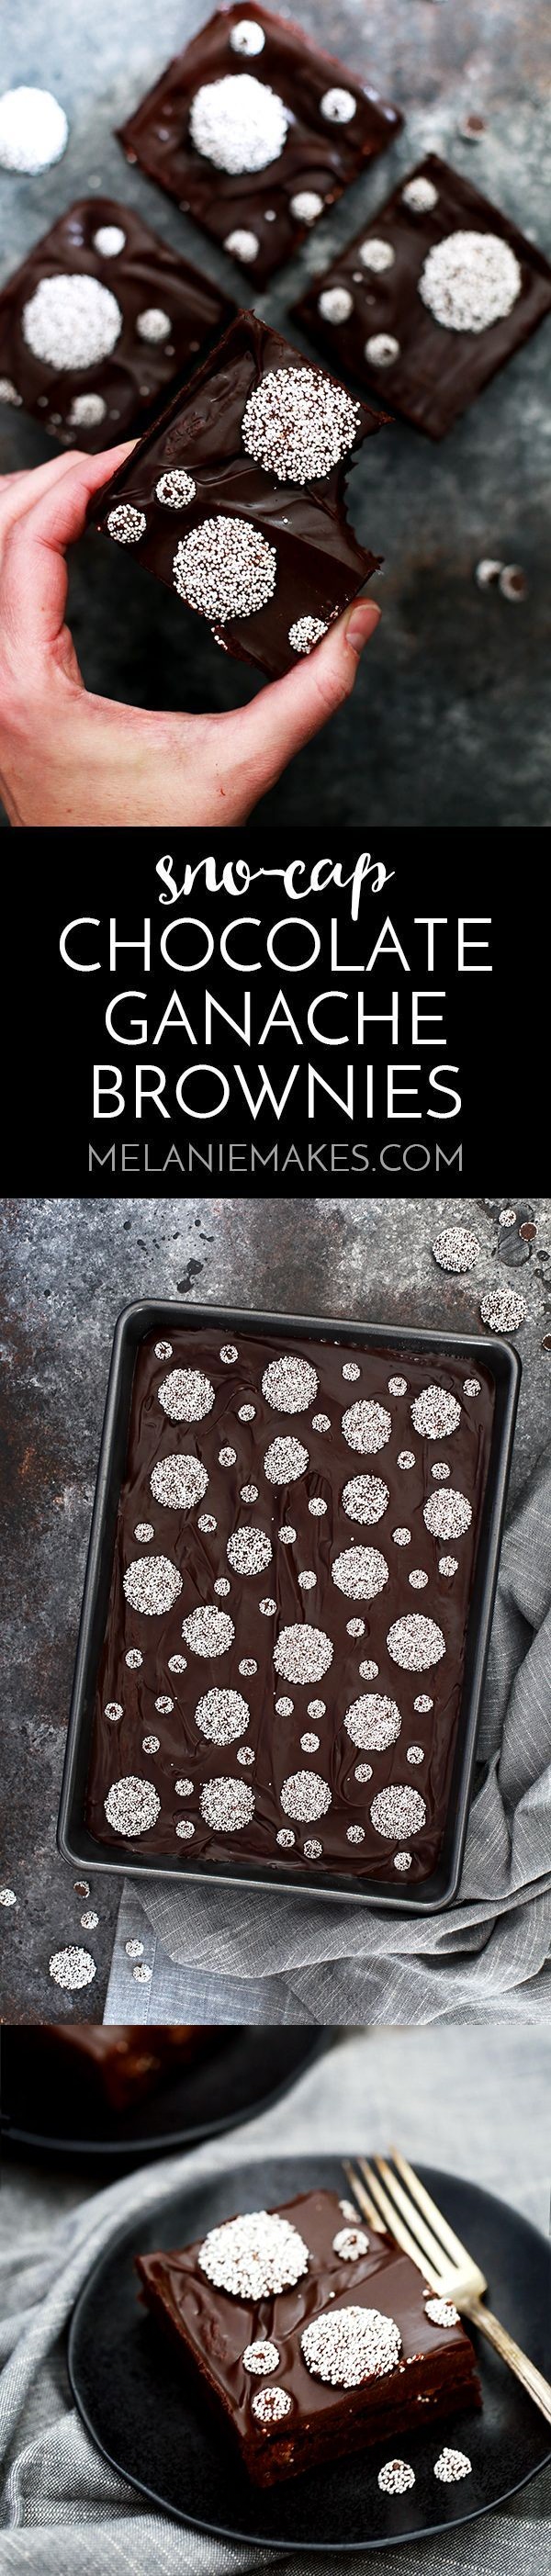 Sno-Cap Chocolate Ganache Brownies